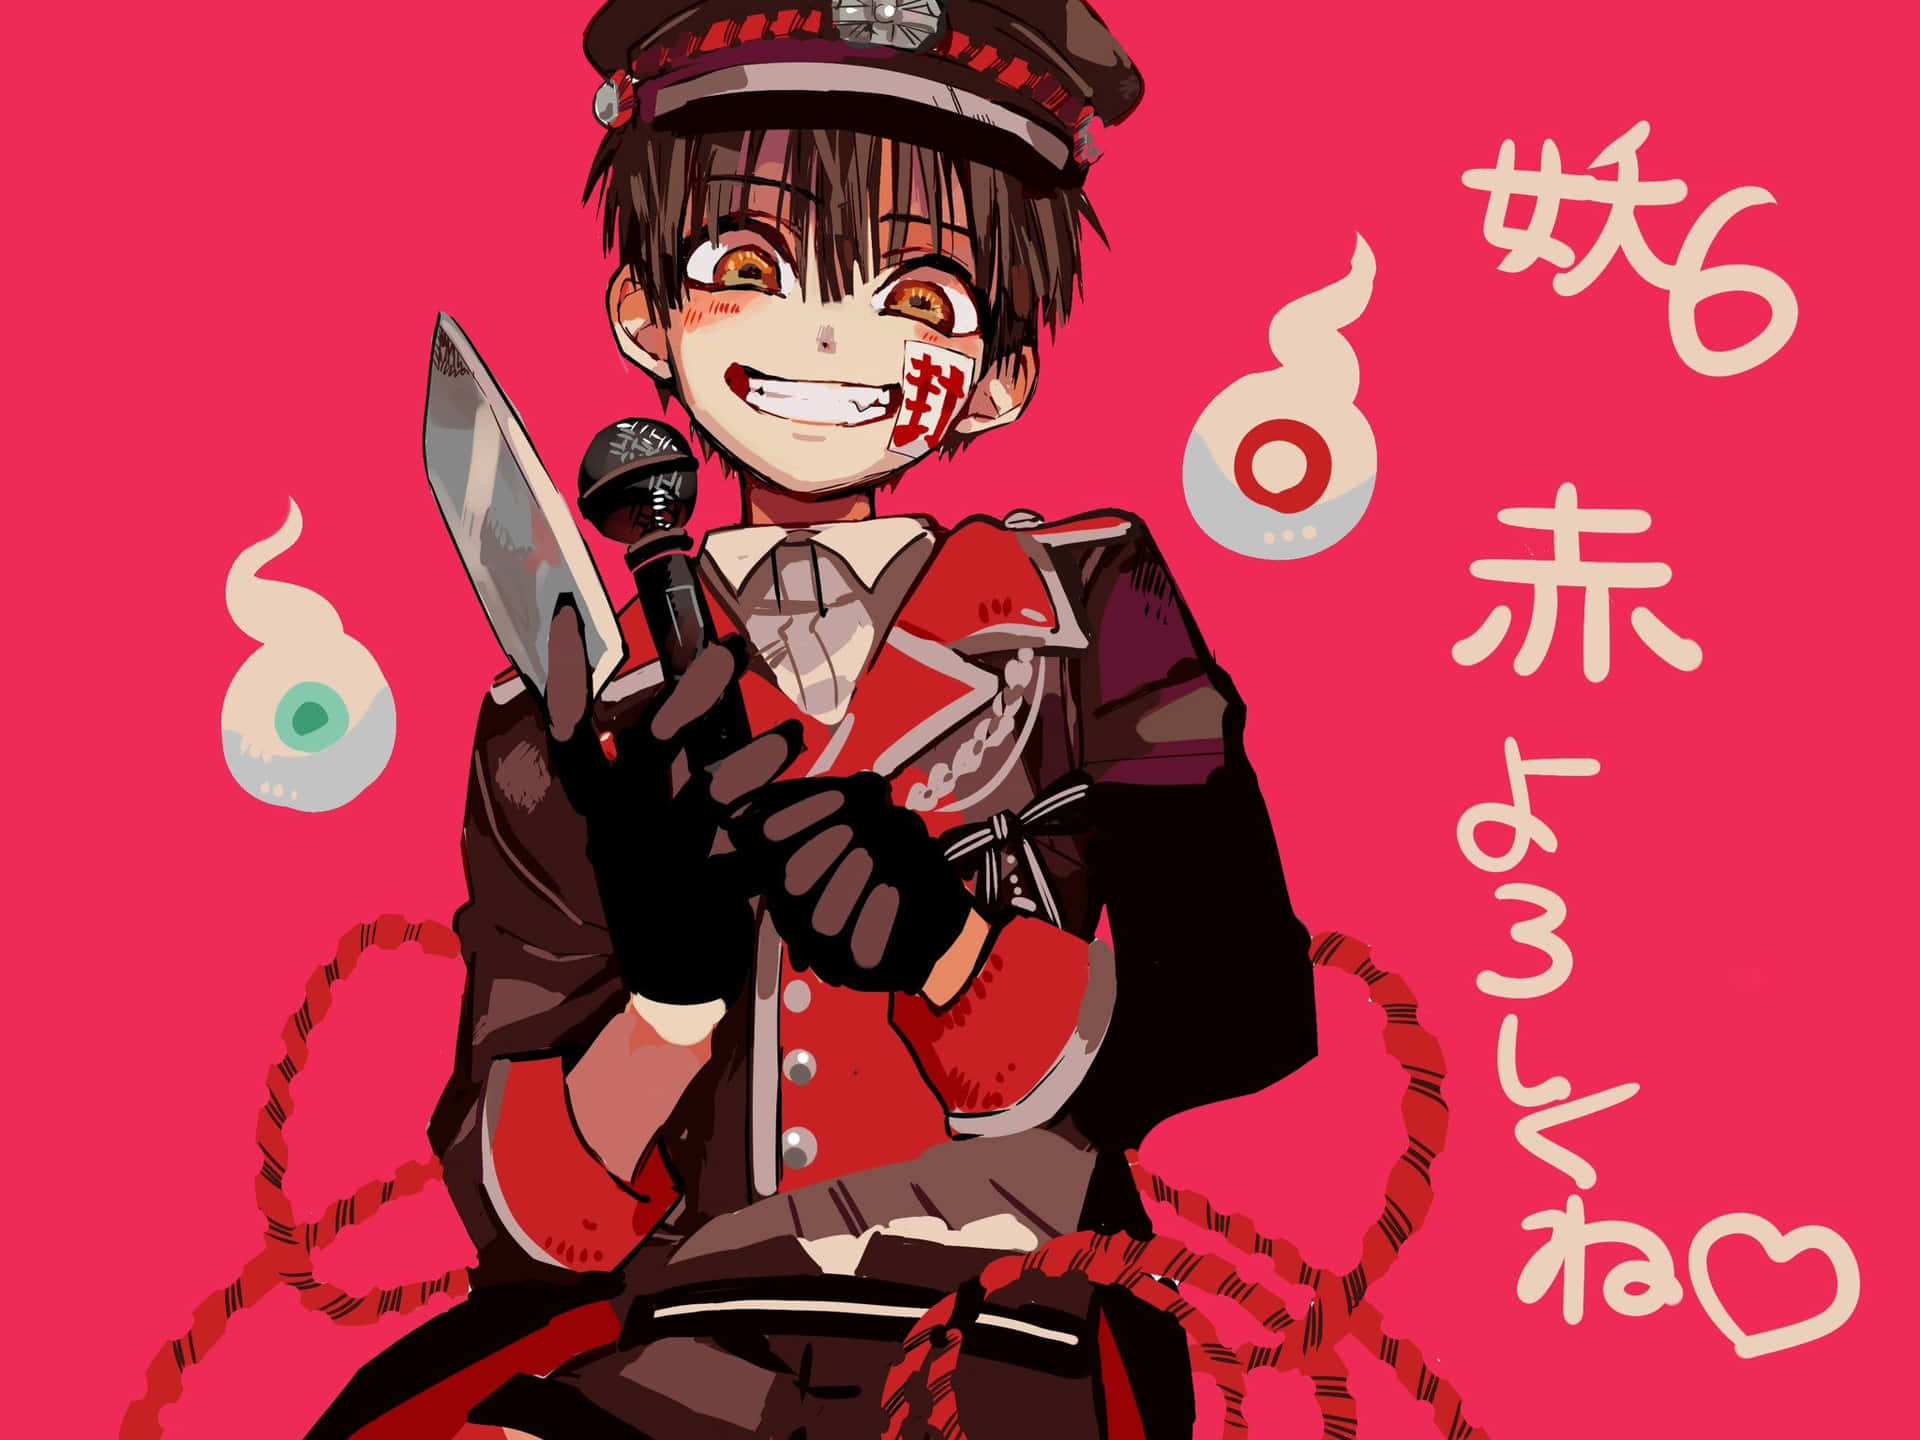 A Boy In A Uniform Holding A Knife